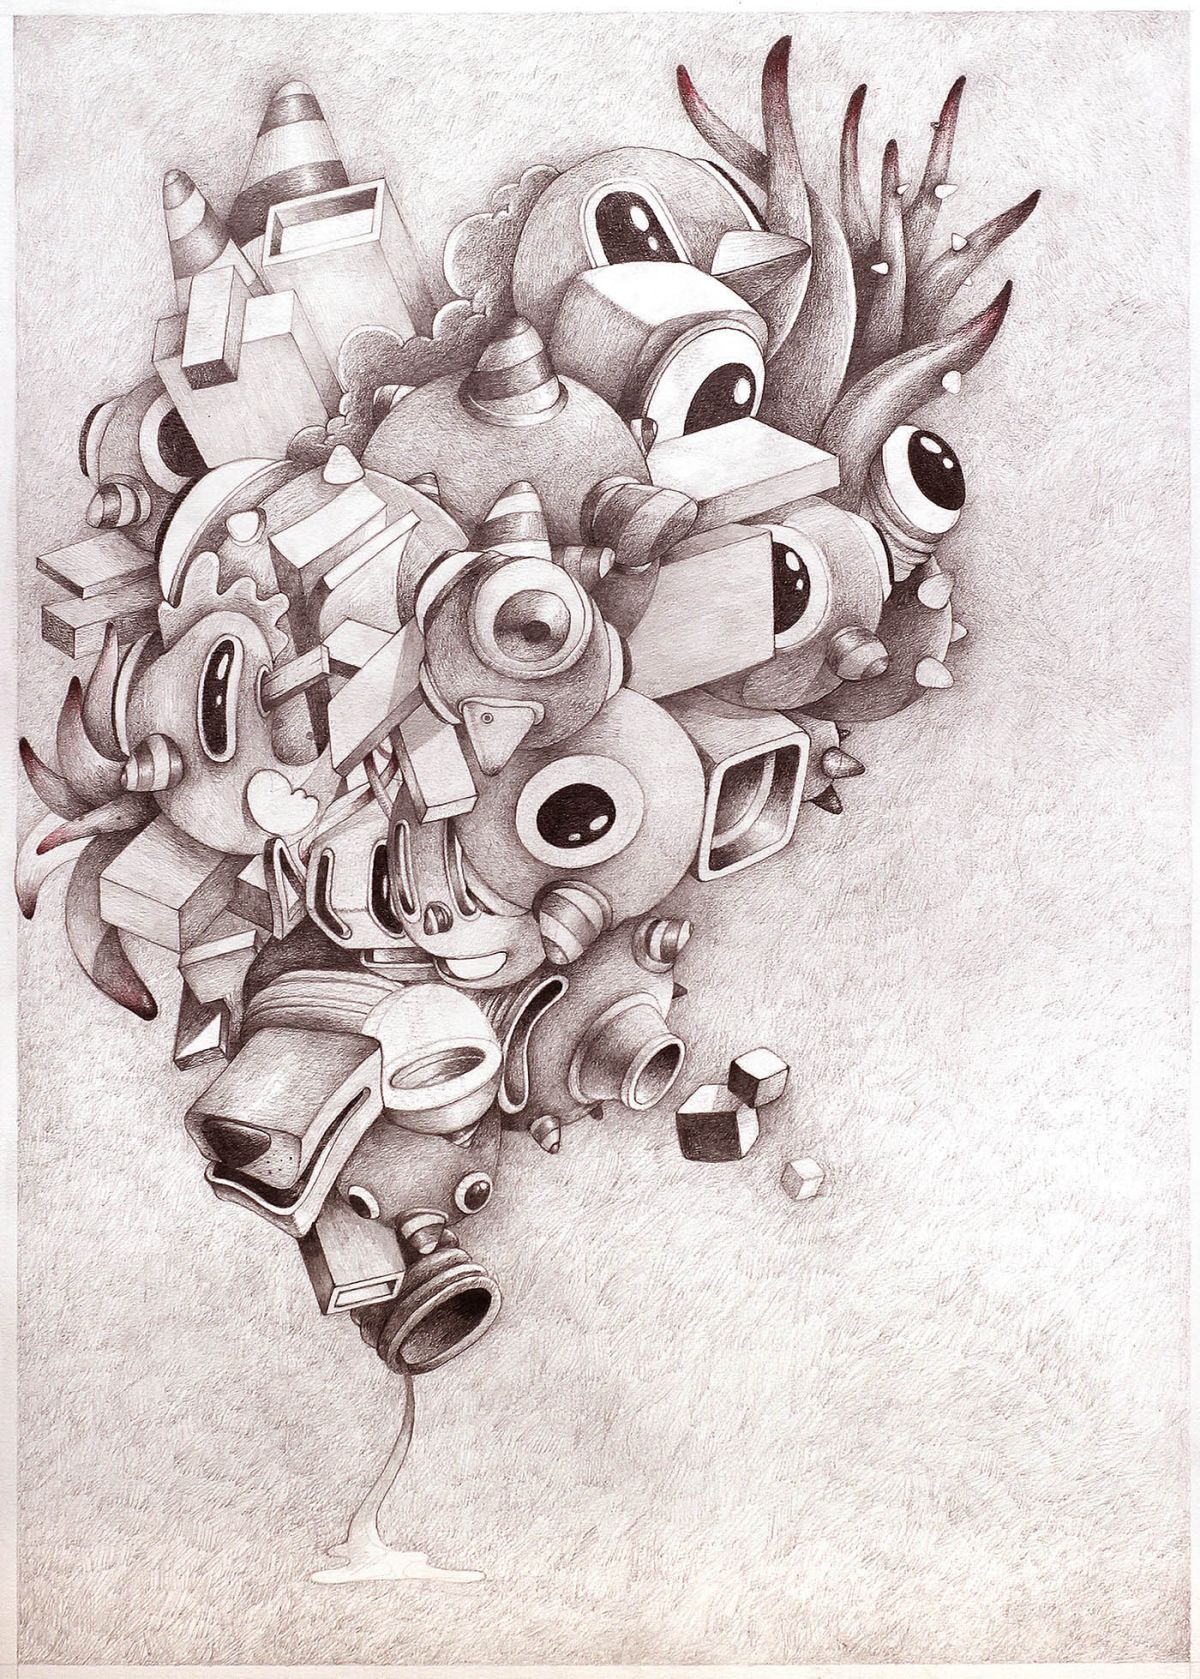 graphite drawing doodle illustration by oscar llorens